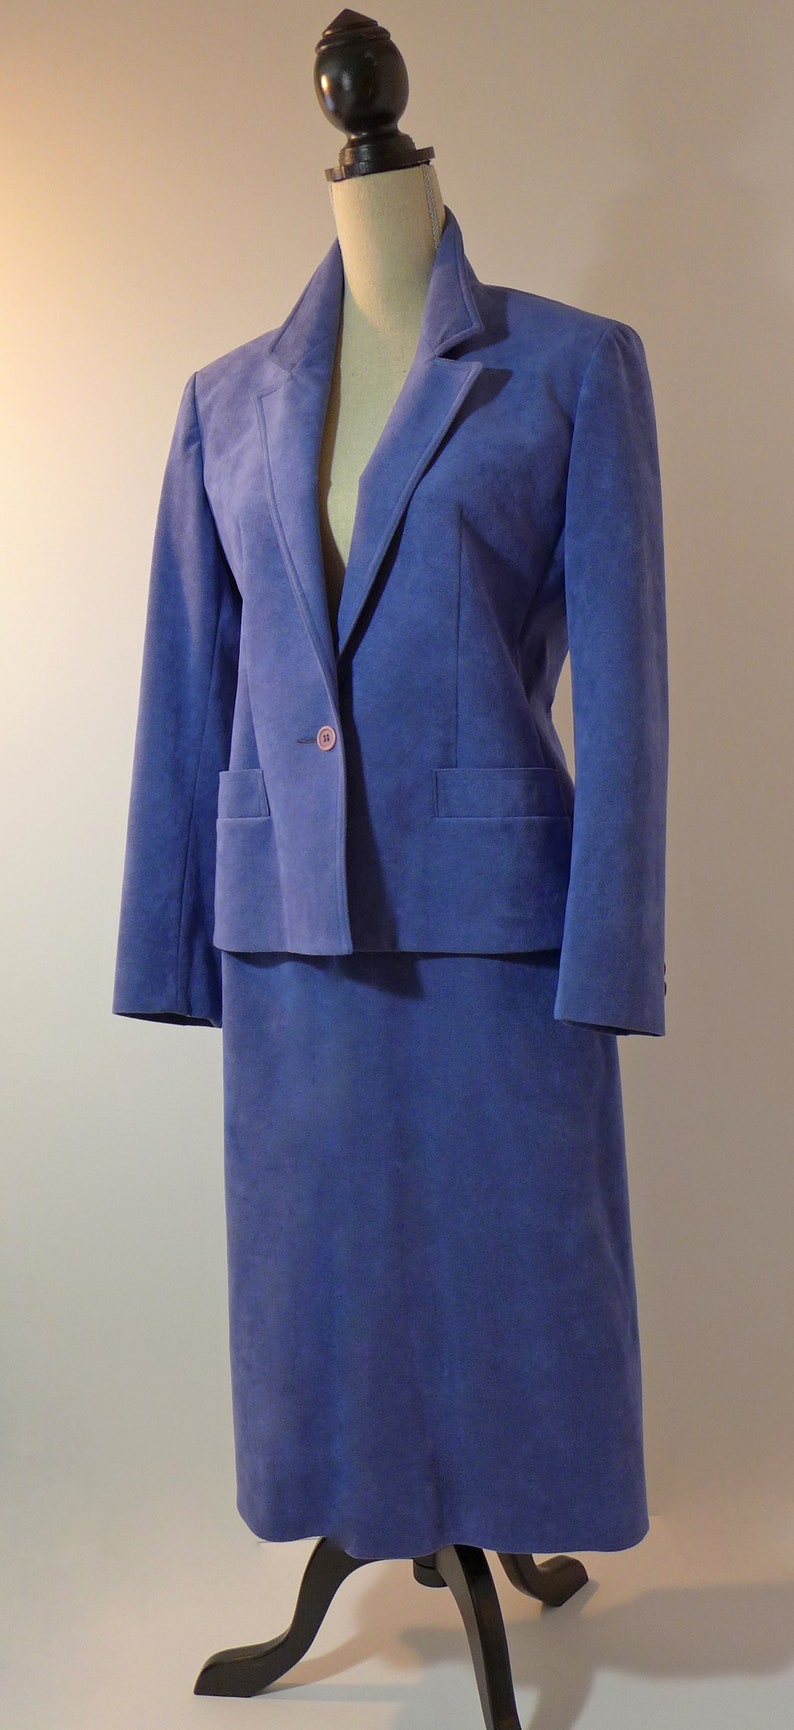 70s 80s Periwinkle ULTRA SUEDE 2-pc Woman's Skirt Suit, Animal Friendly Vegan Blue Suede Suit, Secretary Pinup Flight Attendant image 5